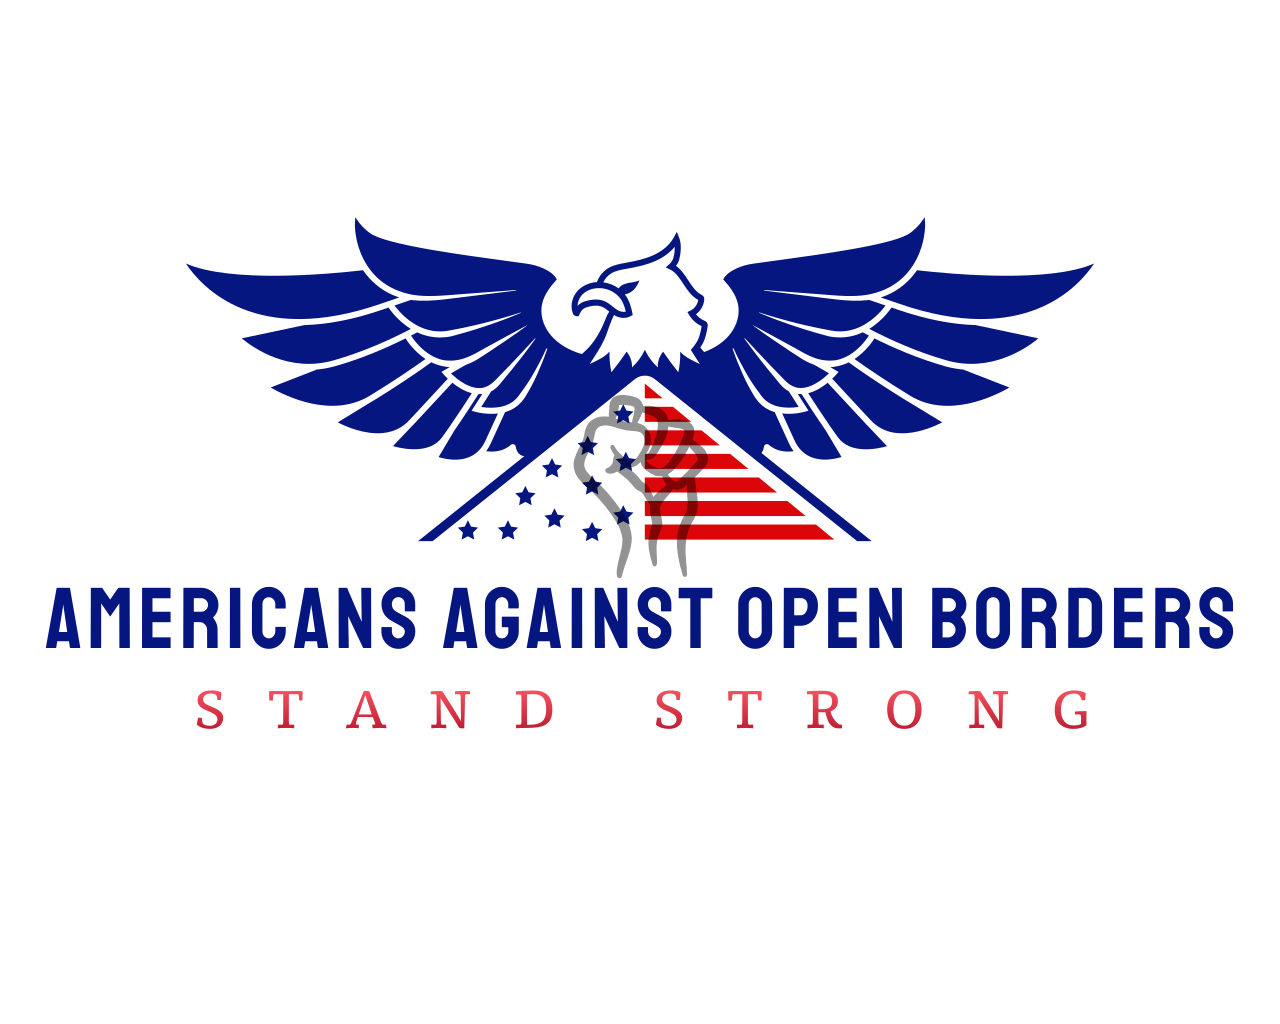 AMERICANS AGAINST OPEN BORDERS's logo